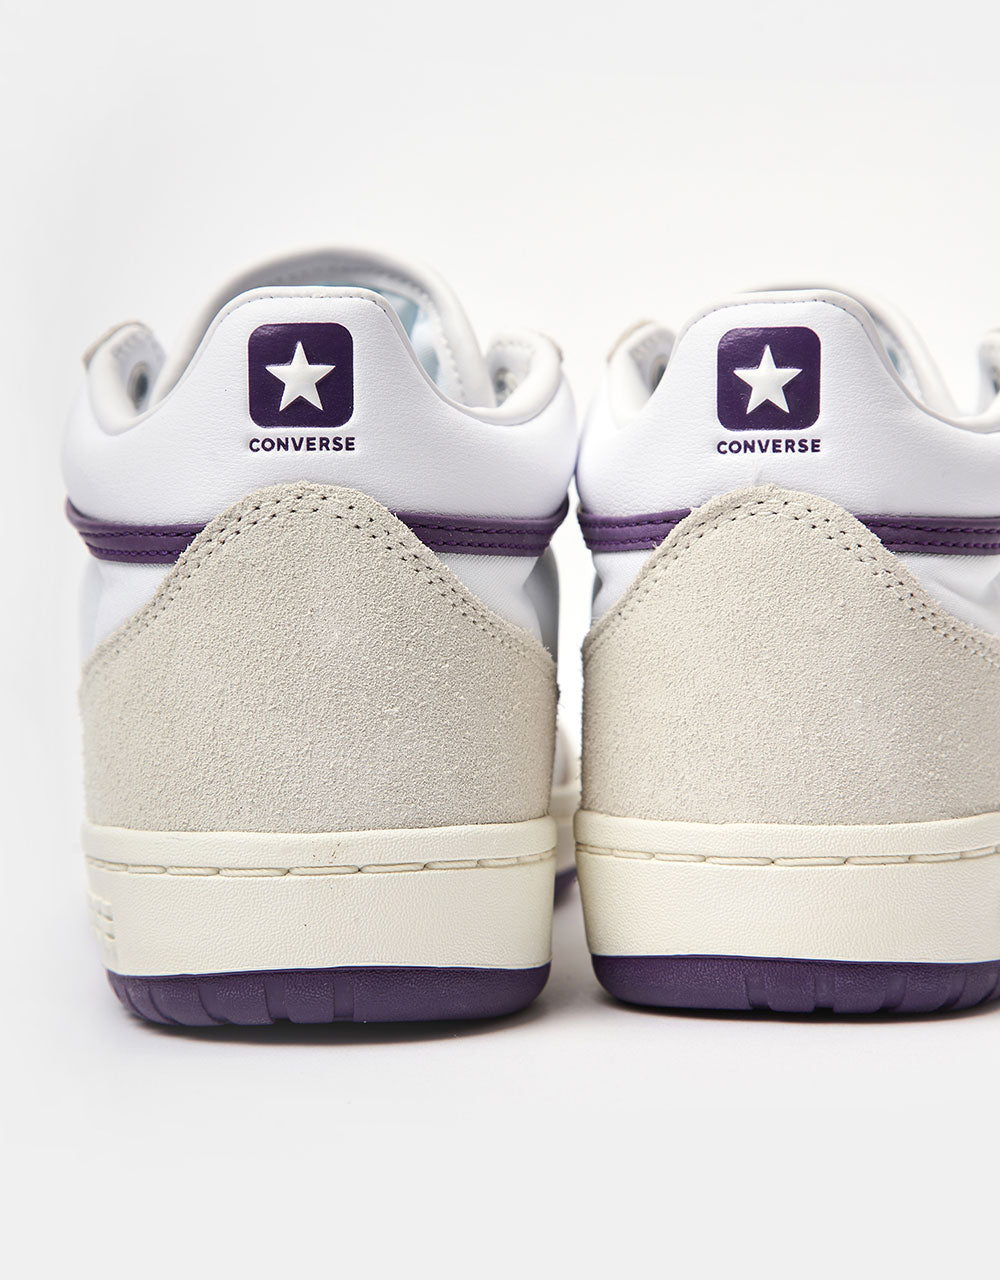 Converse Fastbreak Pro Skate Shoes - White/Vaporous Grey/Purple